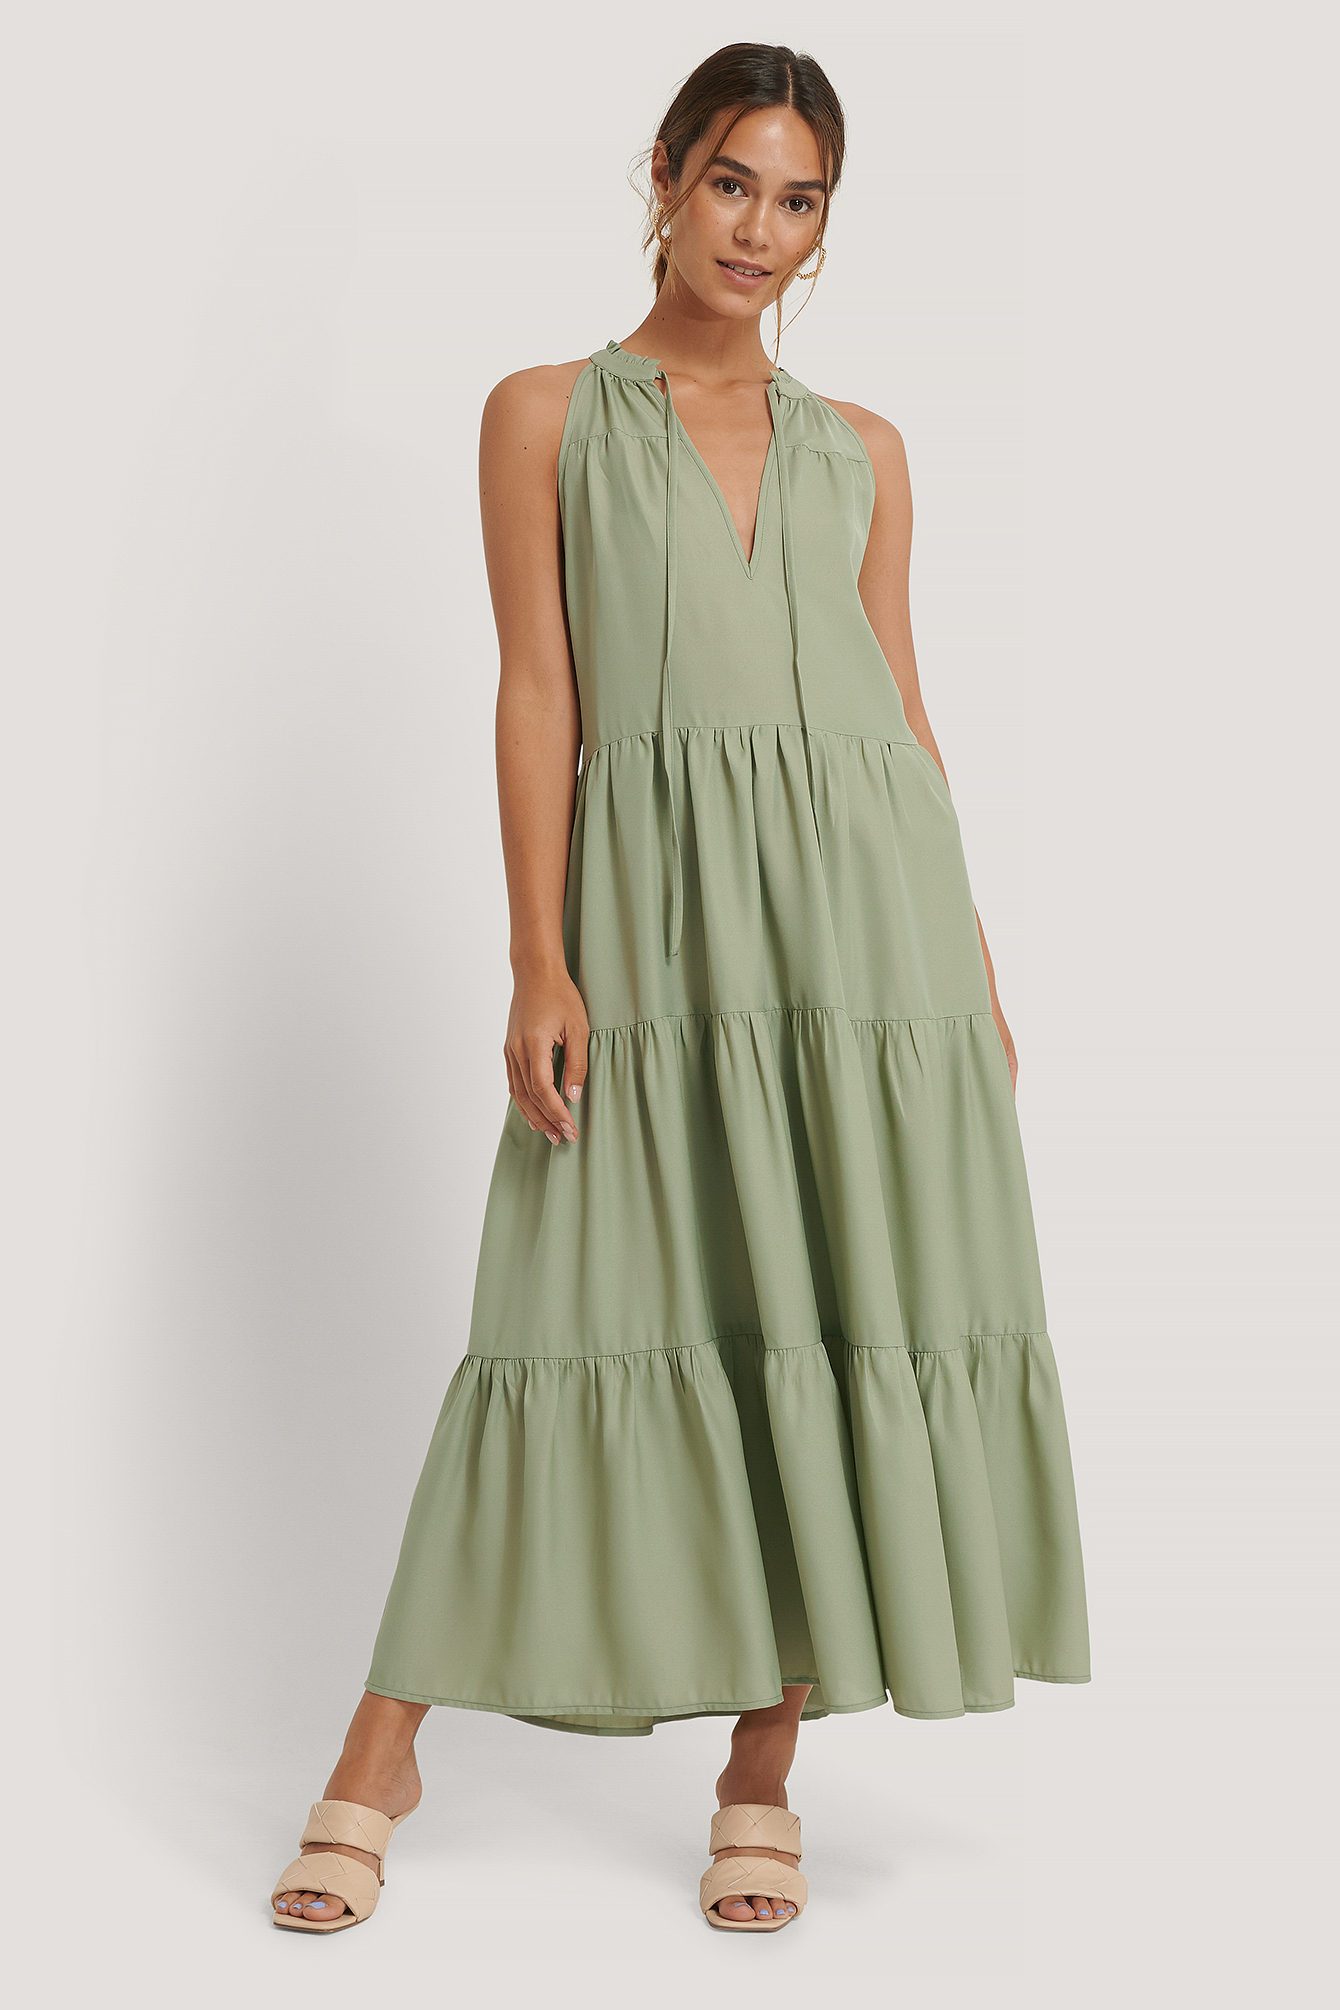 green flowy dress